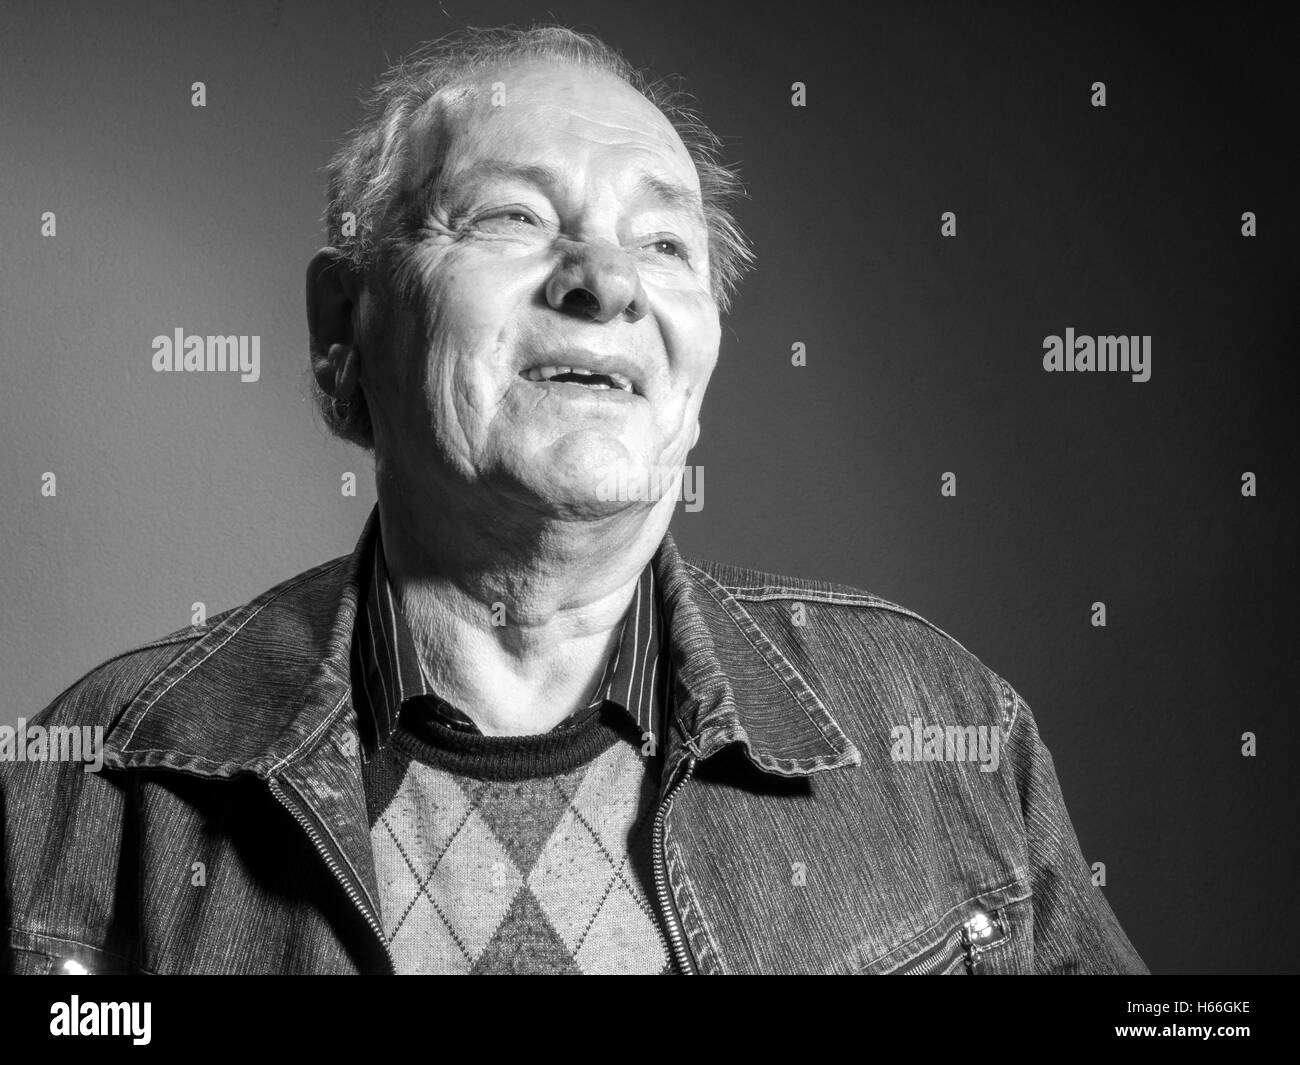 Studio portrait of elderly man Stock Photo